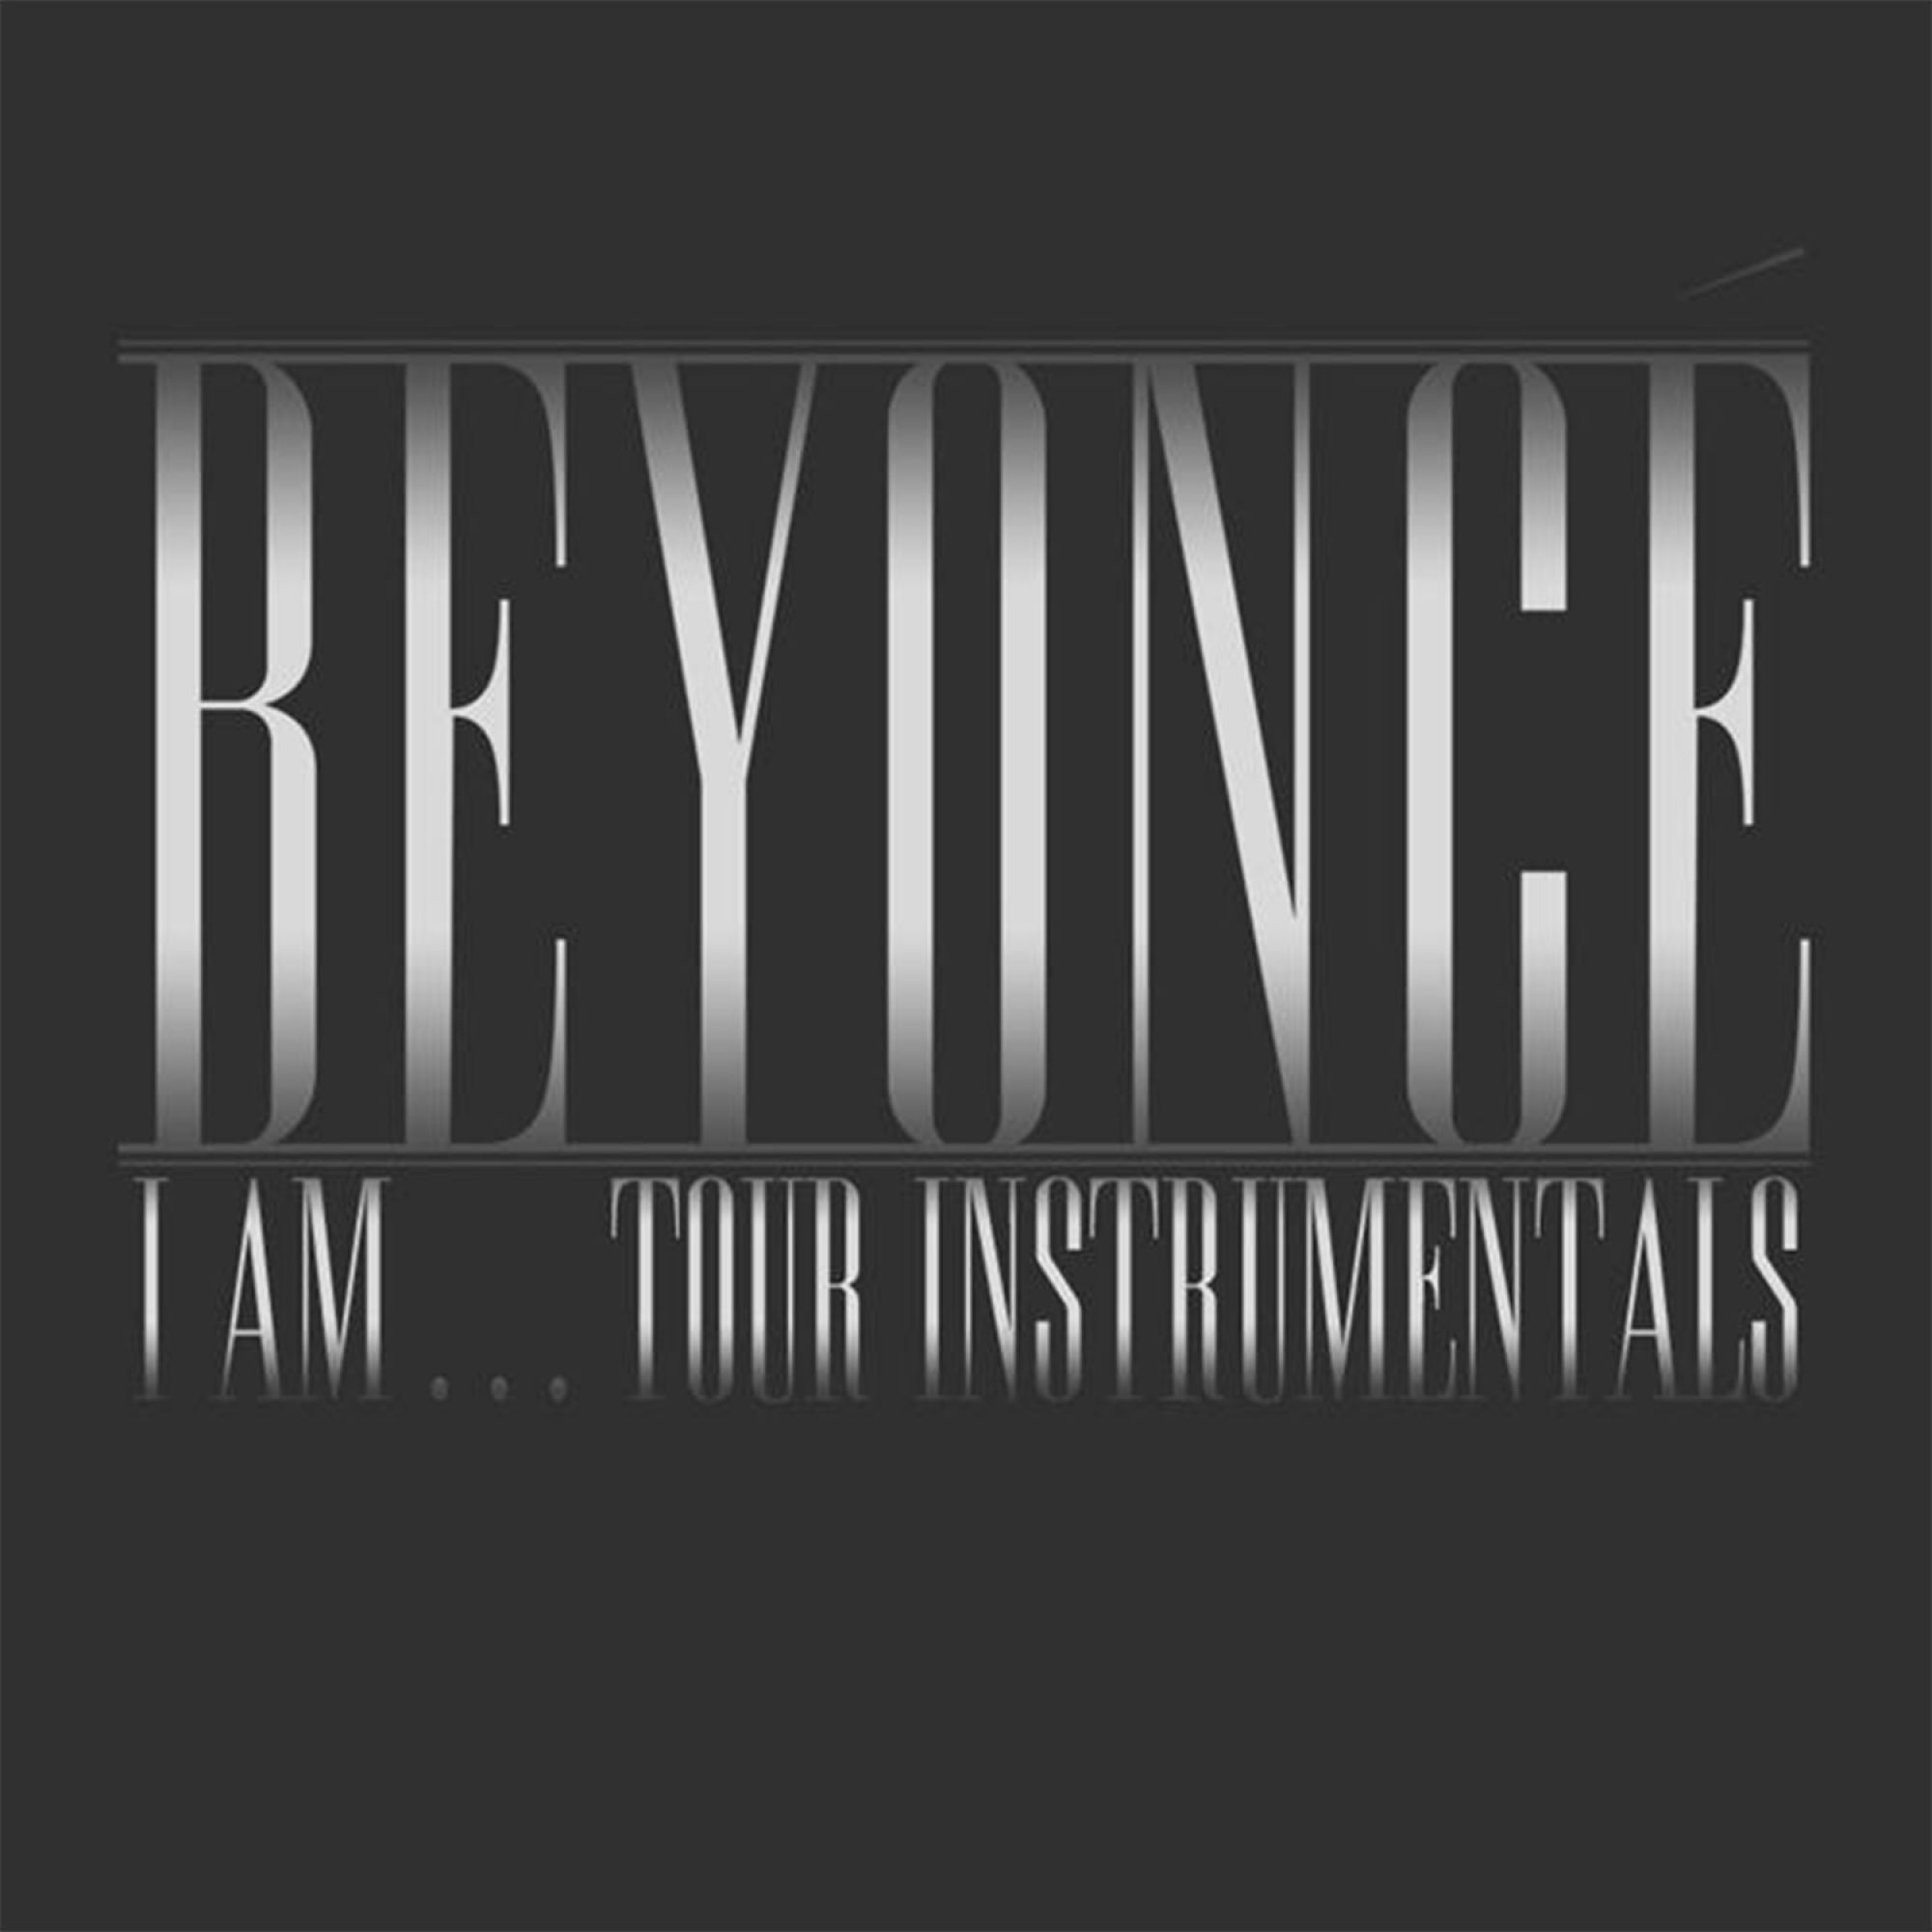 Beyoncé – Beyoncé I Am…Tour Instrumentals (Live)【44.1kHz／16bit】美国区-OppsUpro音乐帝国